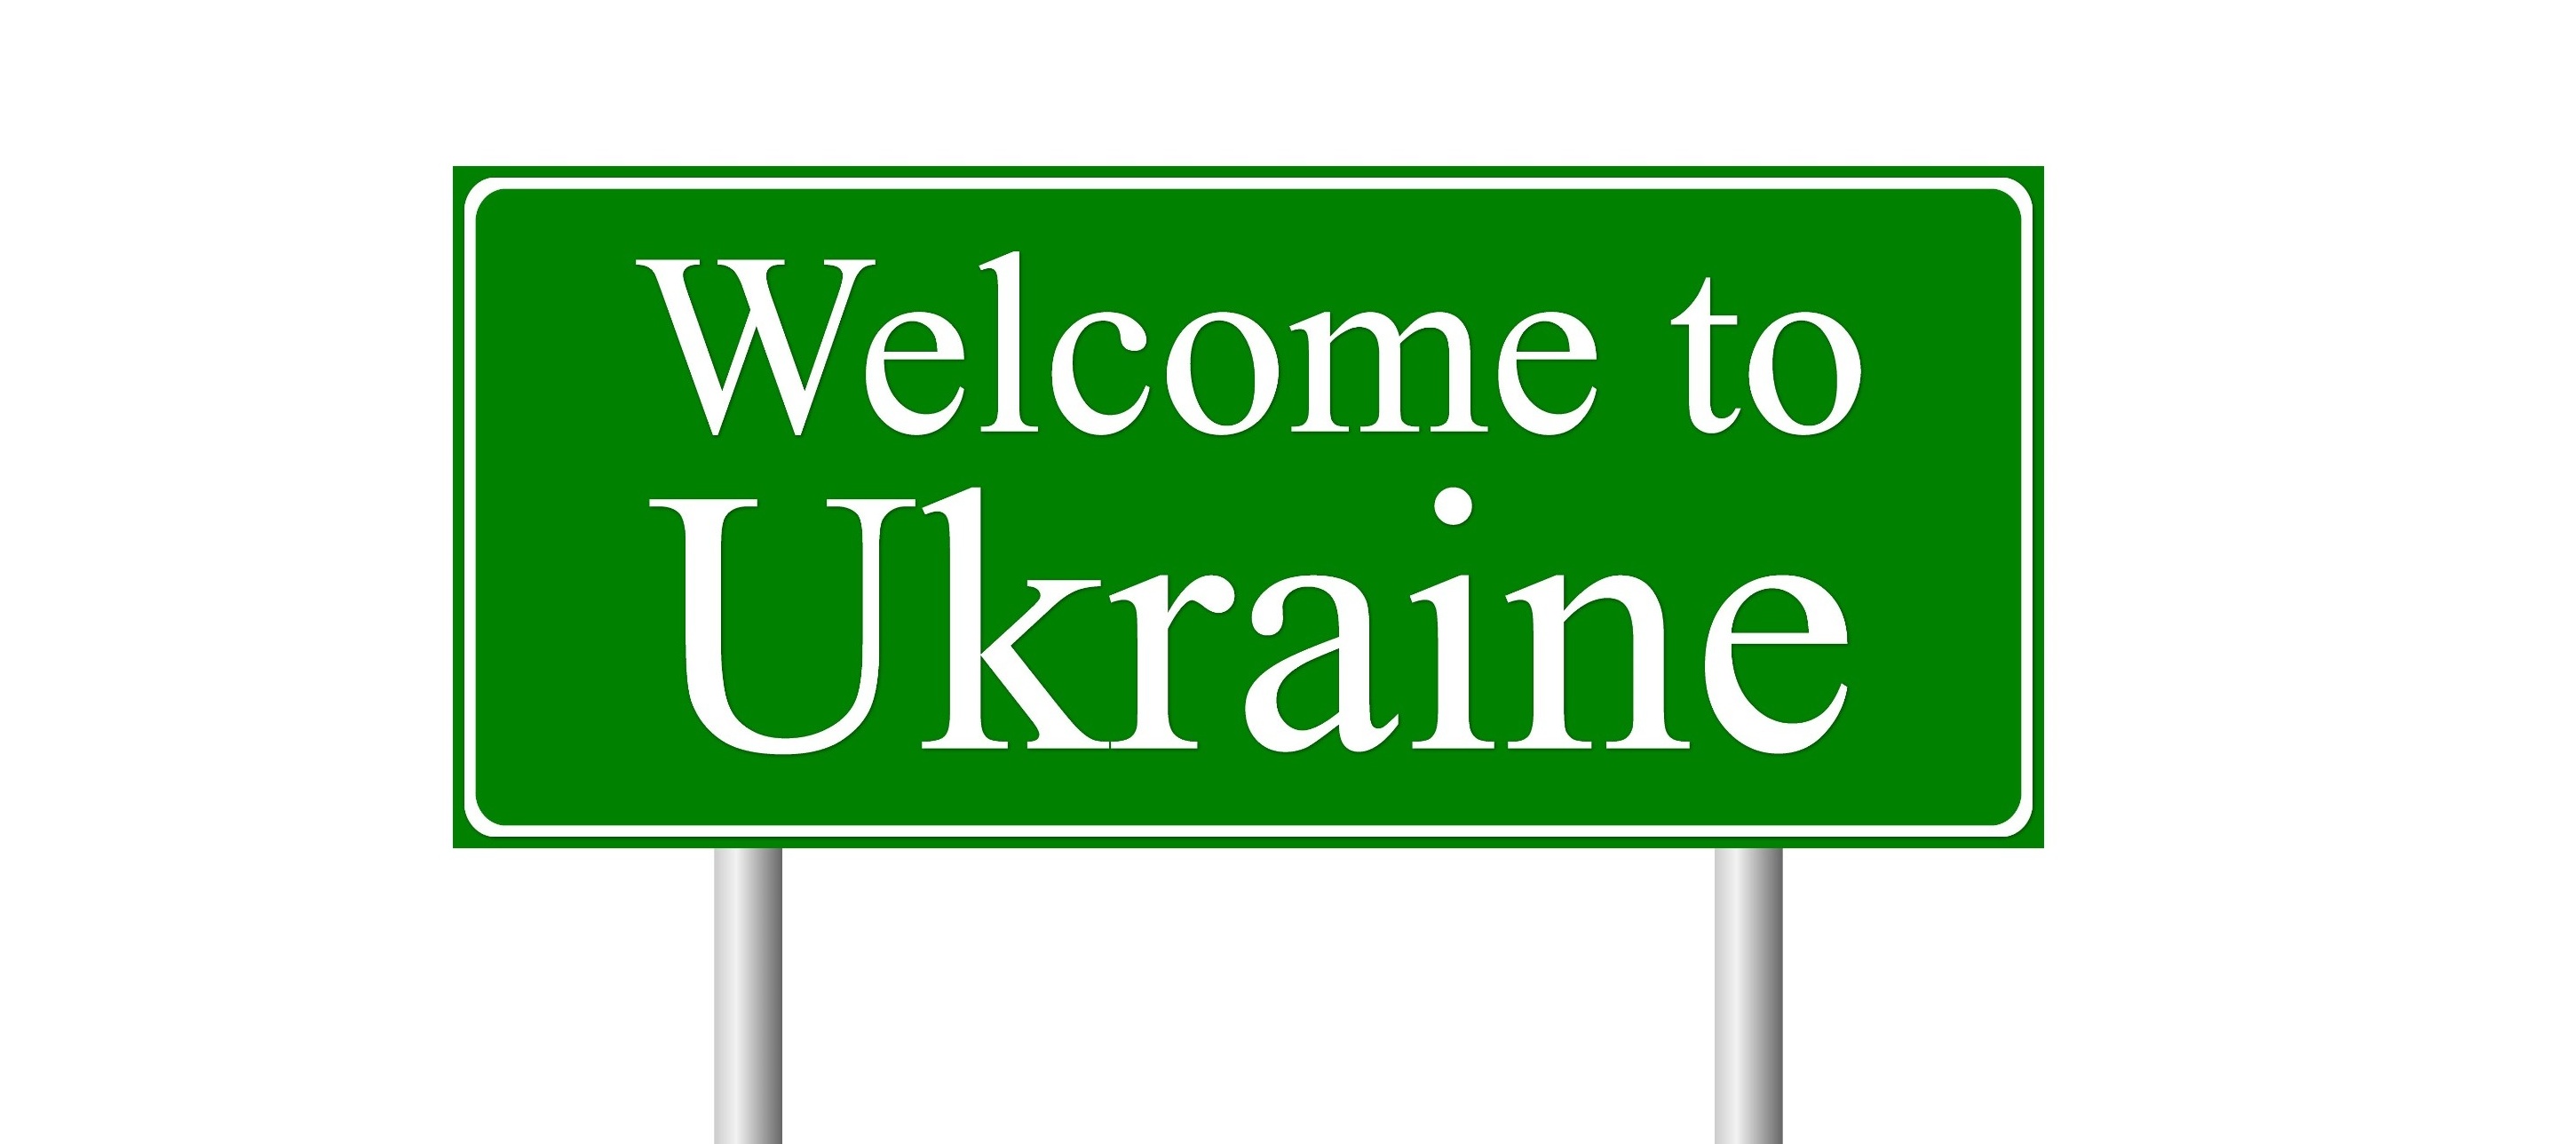 border crossing point to Ukraine